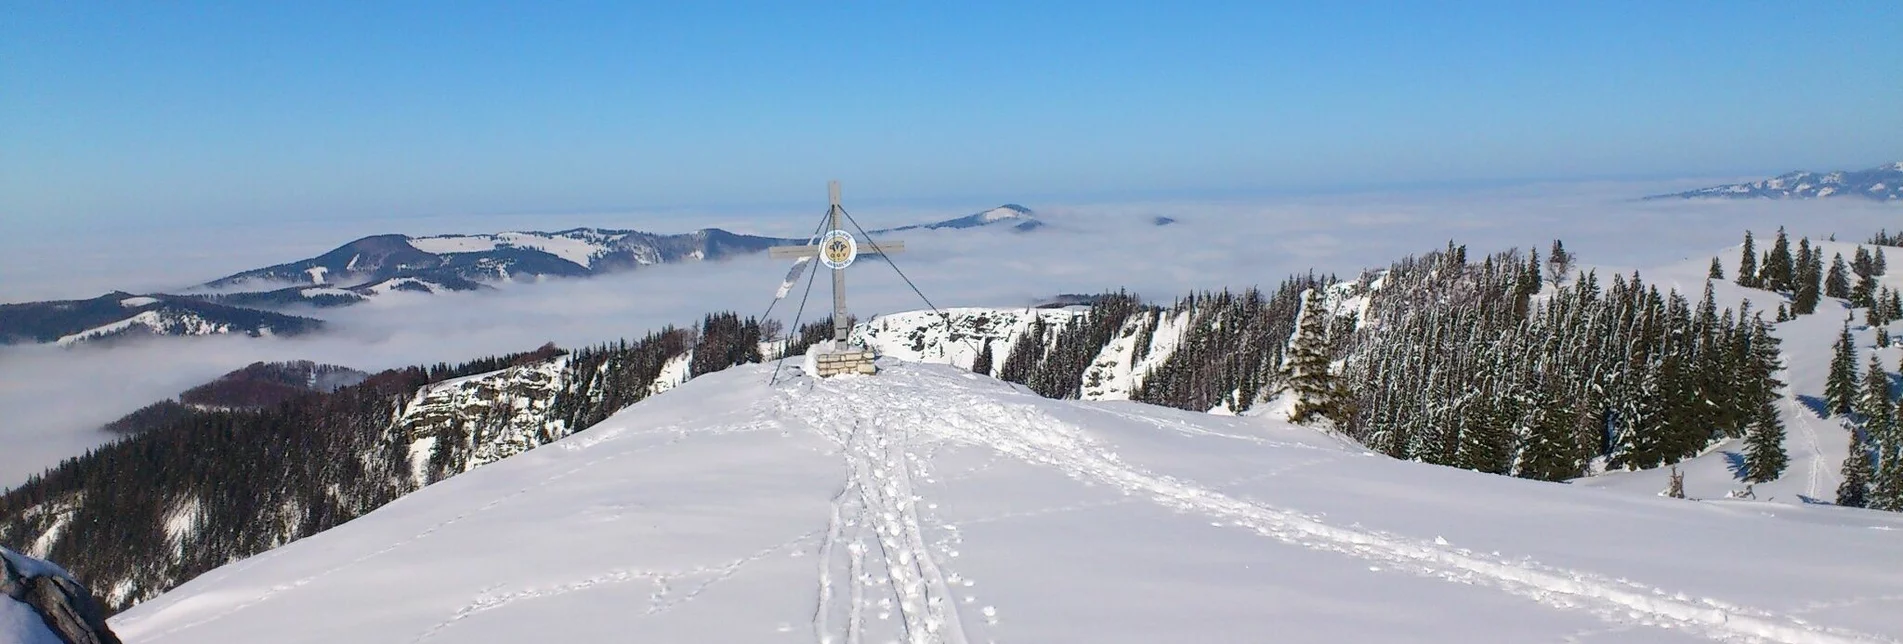 Ski Touring Tirolerkogel from Annaberg via Ebenbaueralm - Touren-Impression #1 | © TV Hochsteiermark